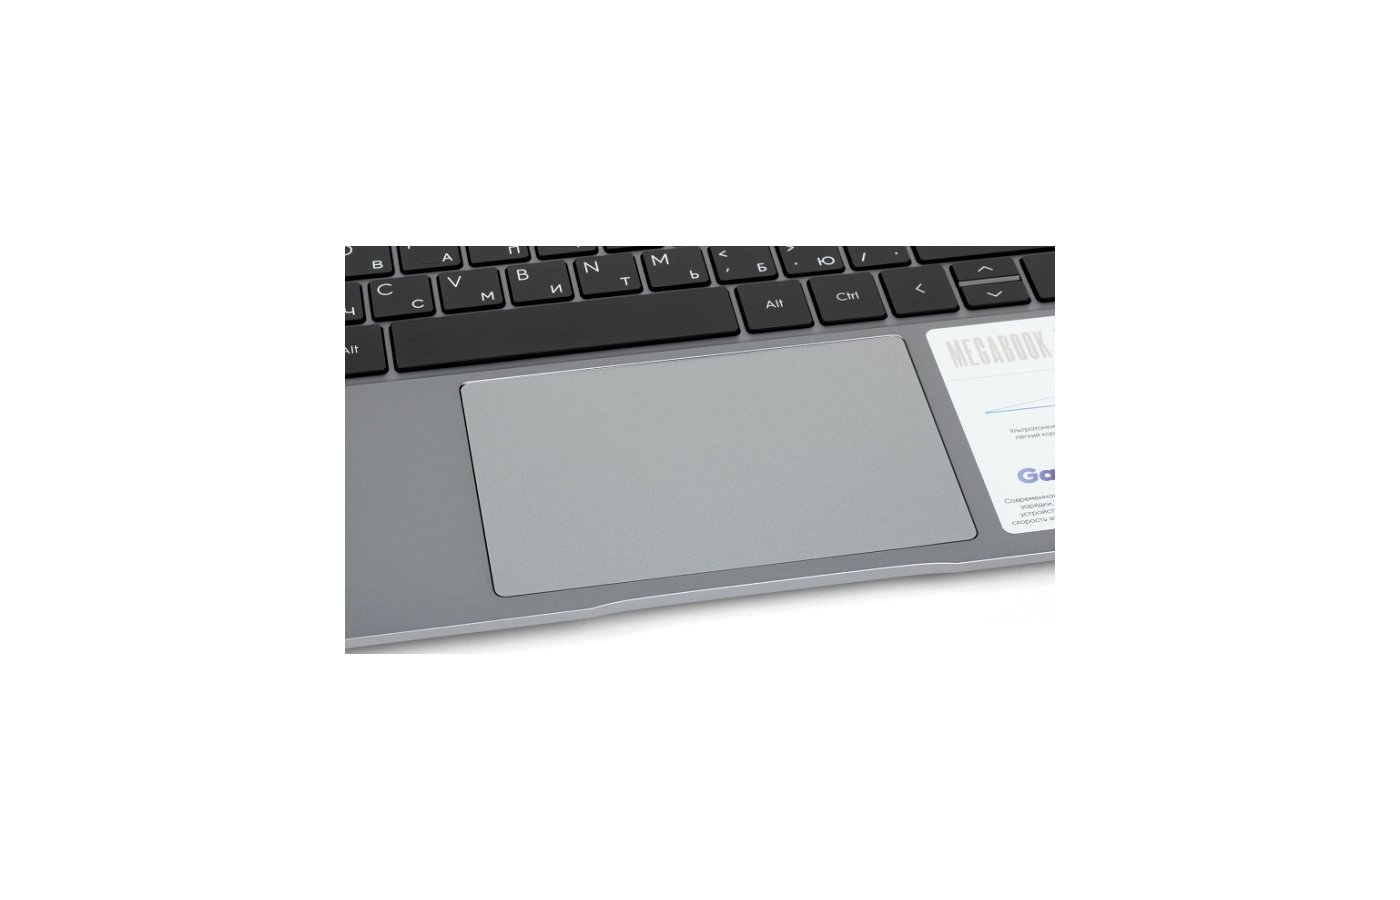 Ноутбук Tecno MEGABOOK t1 серый (t1-i5-16+512g-Grey-win11-14.1'). Ноутбук Tecno MEGABOOK t1 серый. Ноутбук Tecno MEGABOOK t1 серый 14.1. Tecno megabook t1 5560u